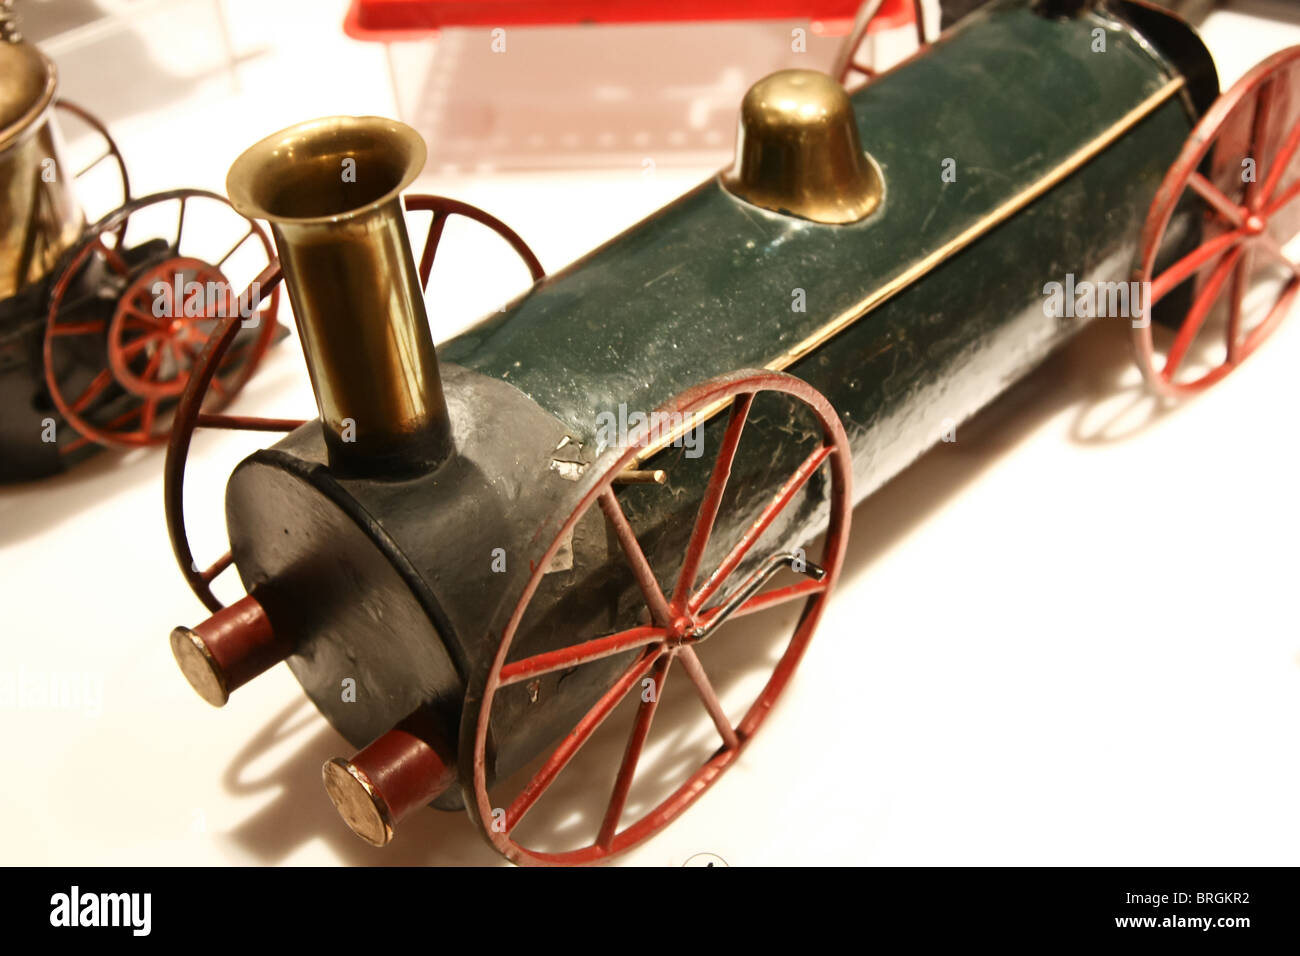 vintage mechanical locomotive toy model Stock Photo